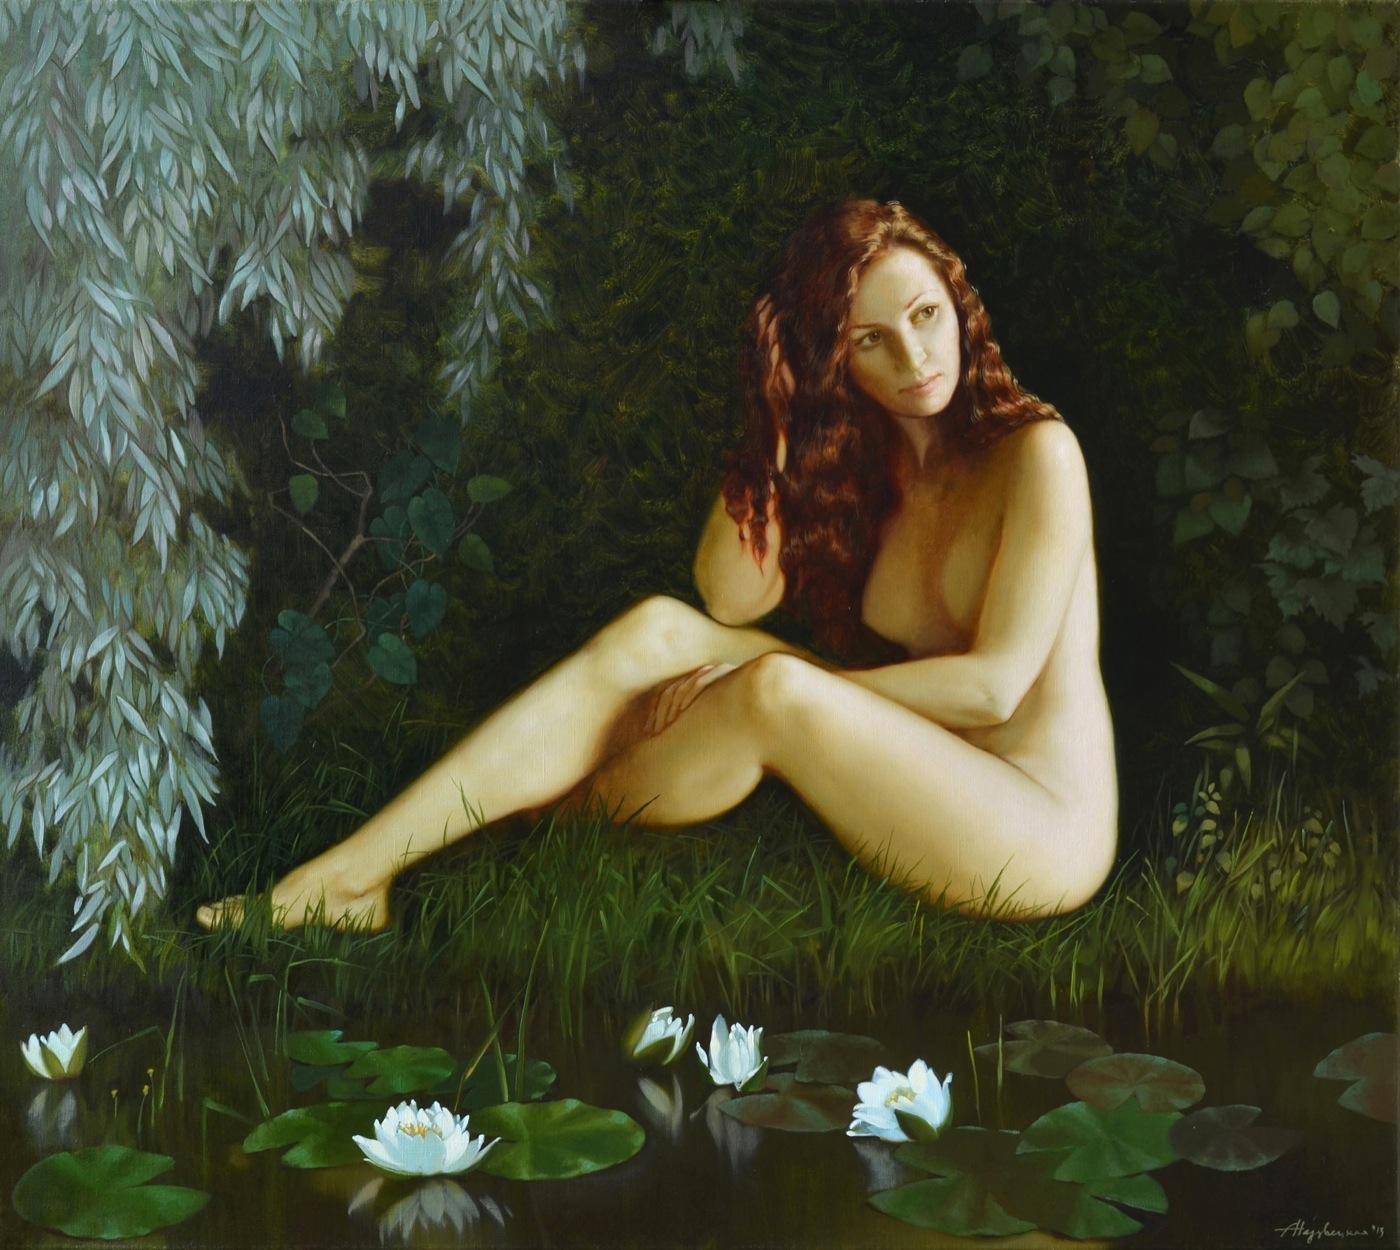 Nymph at the pond. Original modern art painting